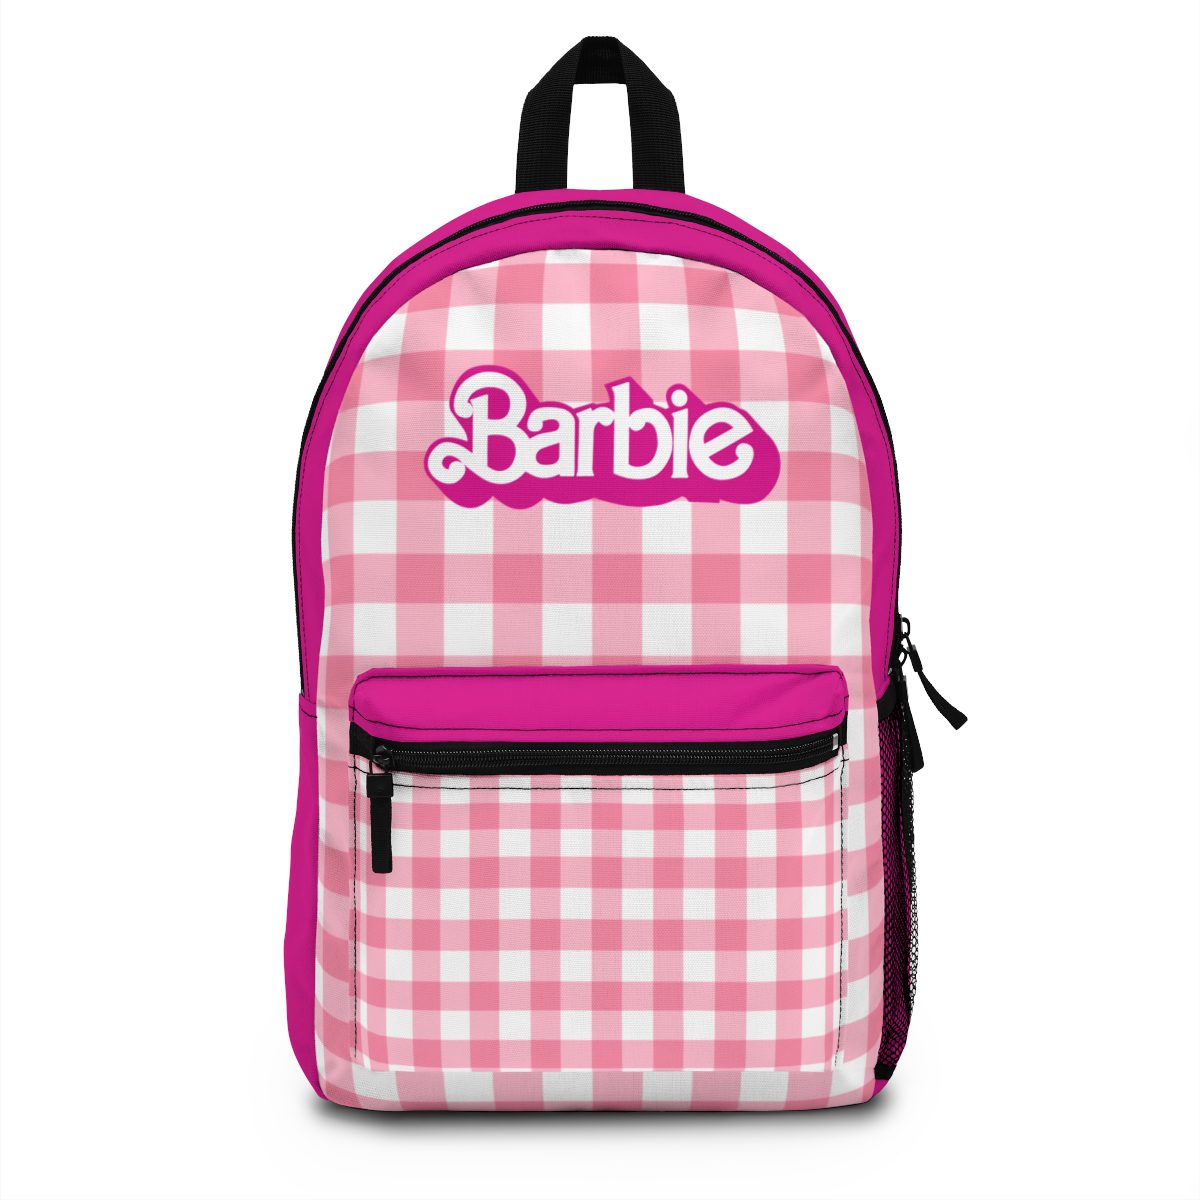 Barbie School Chic: Magenta and White Grid Kids Backpack Cool Kiddo 10